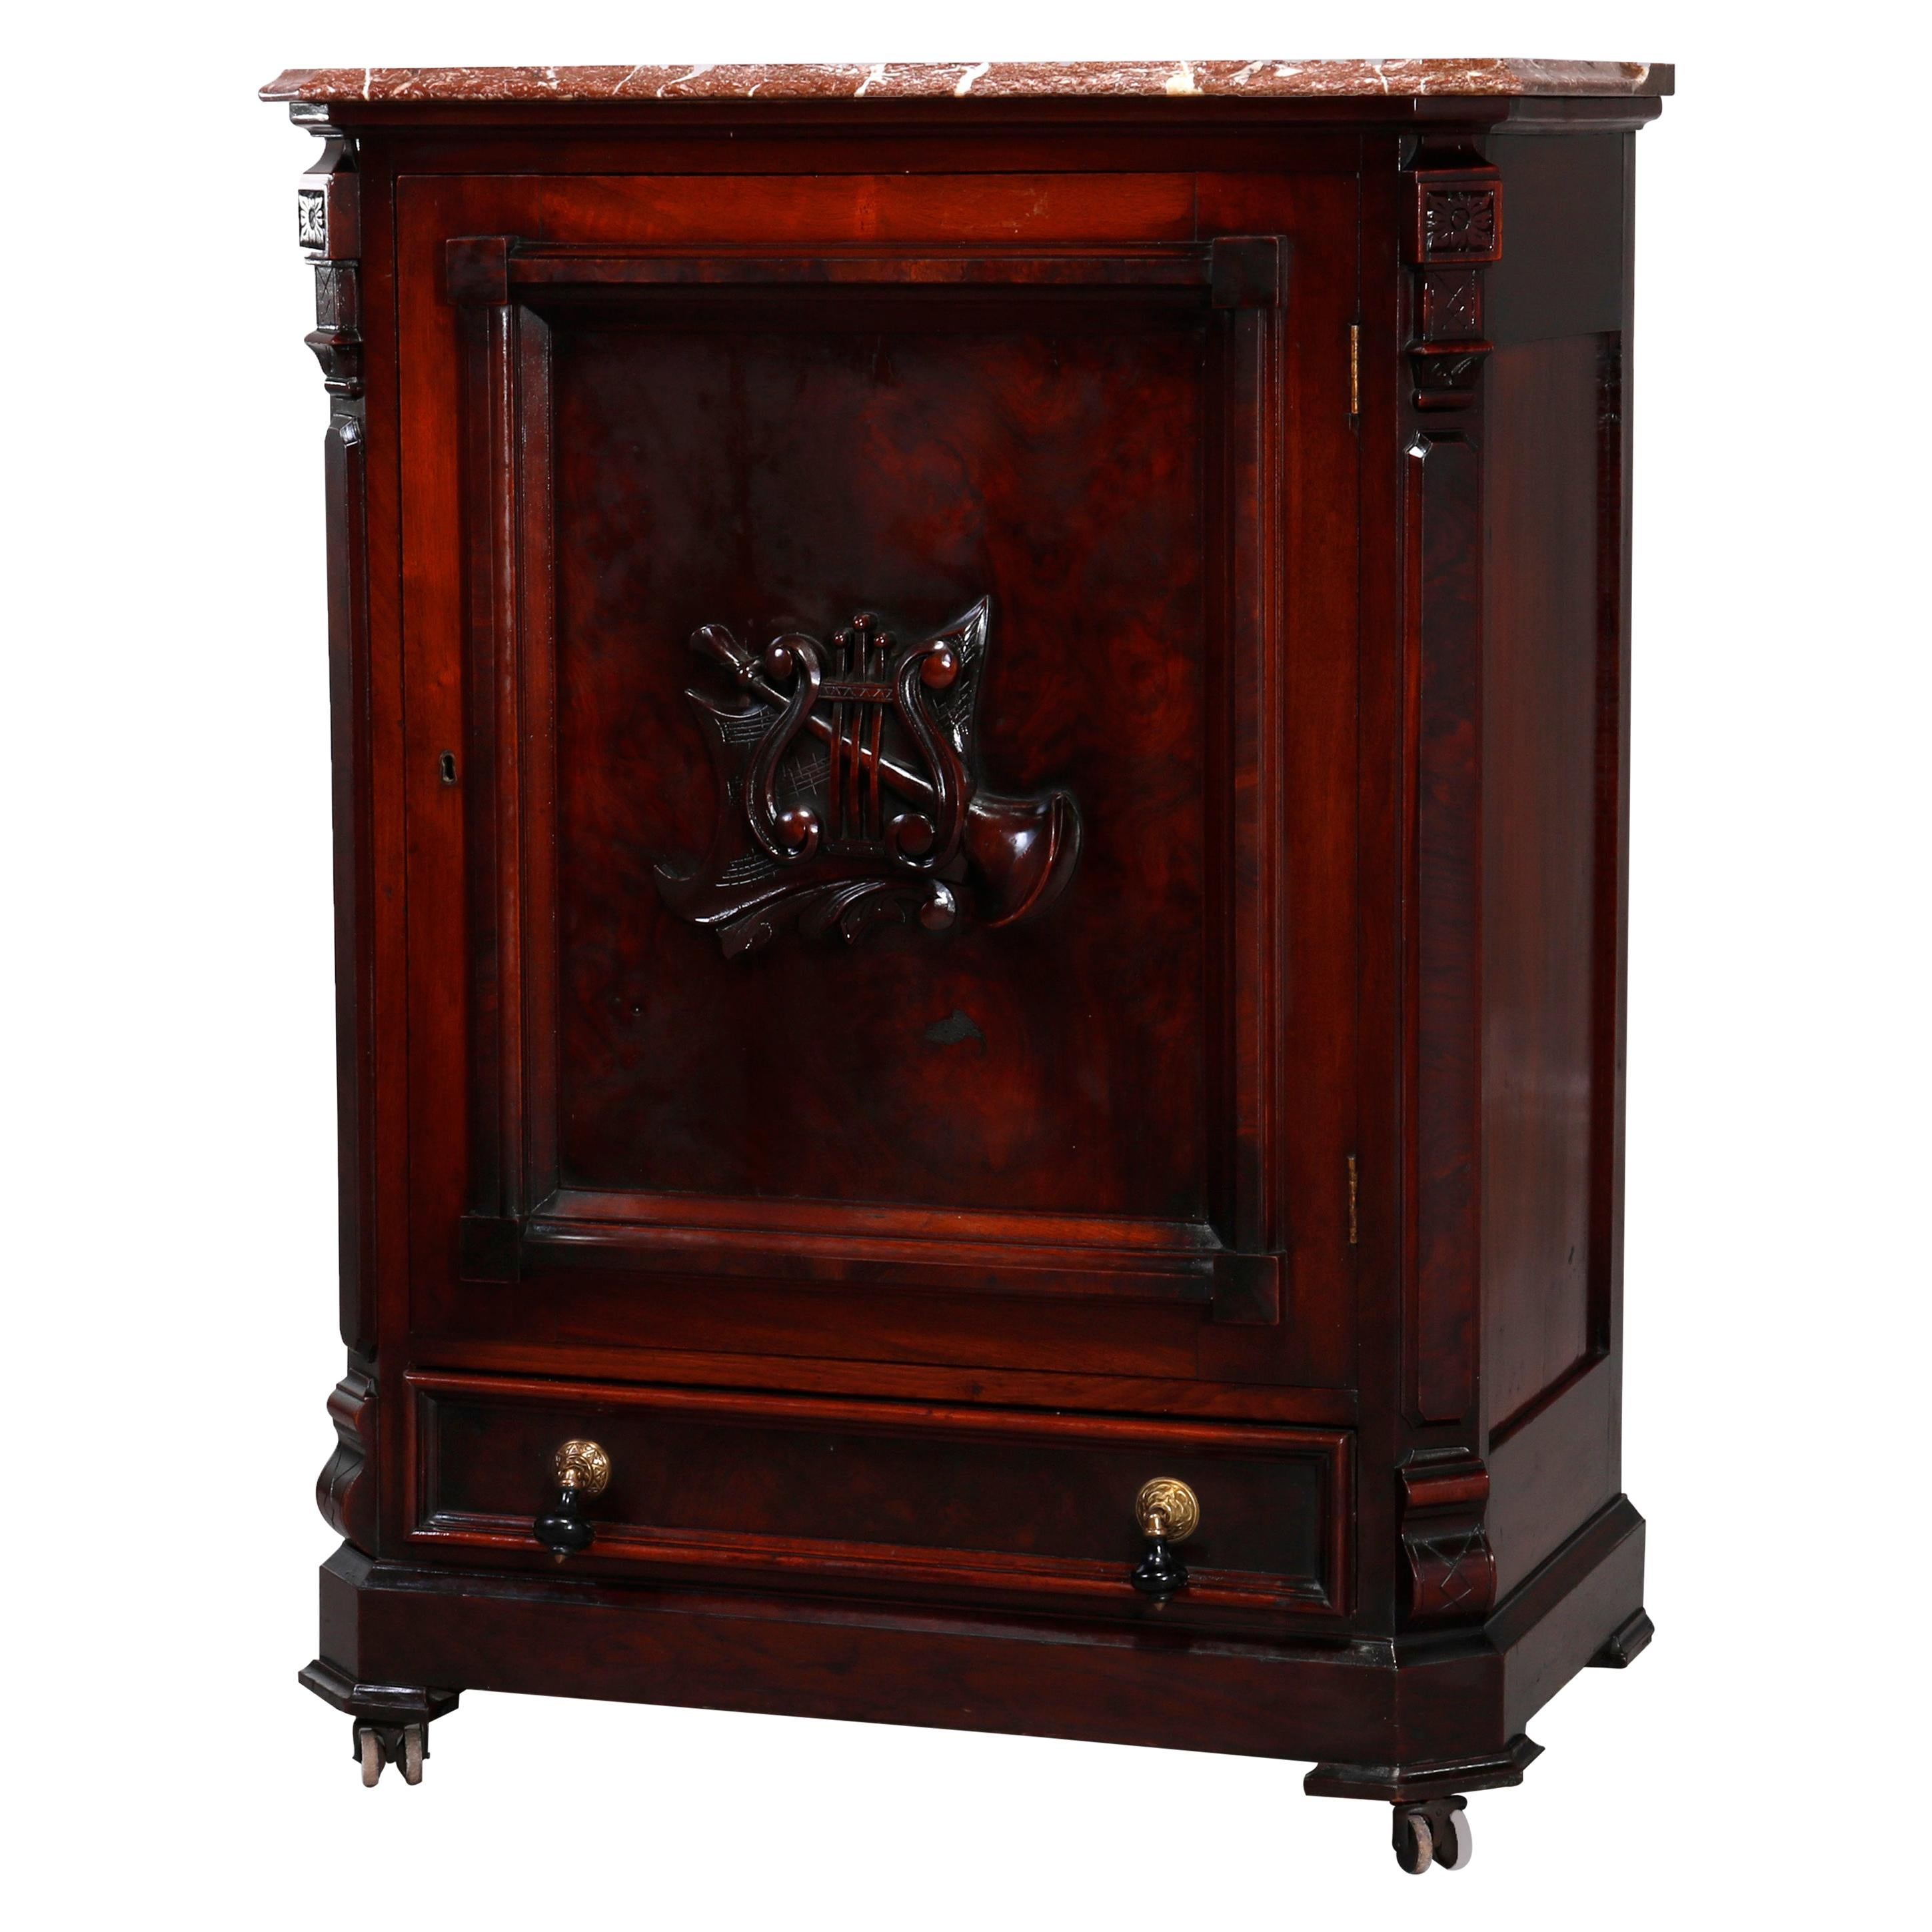 Antique Renaissance Revival Walnut Music Cabinet with Rouge Marble Top, c1870